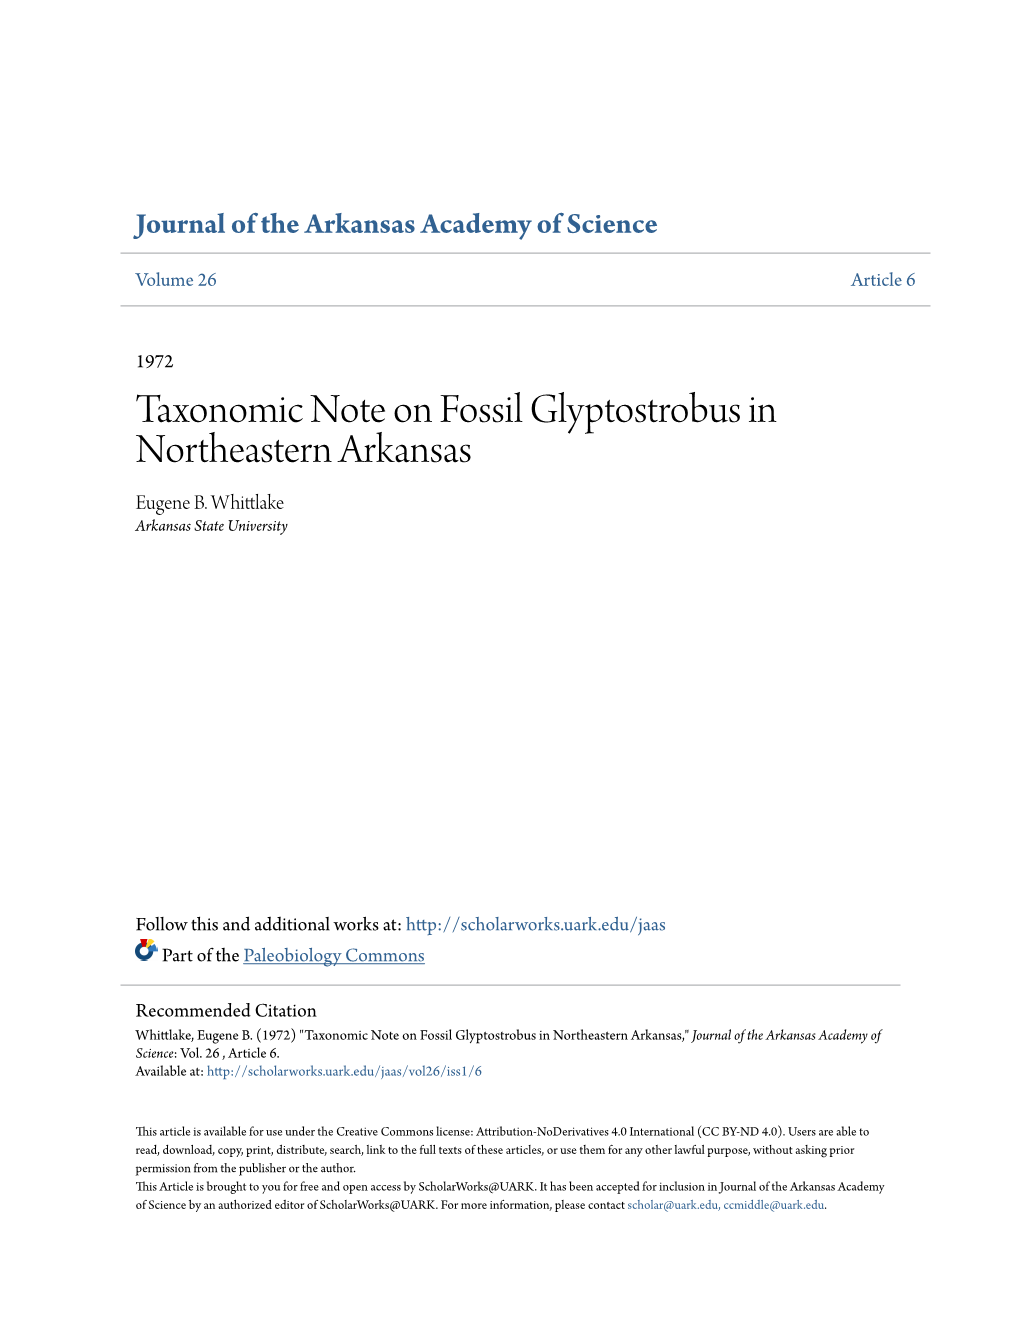 Taxonomic Note on Fossil Glyptostrobus in Northeastern Arkansas Eugene B